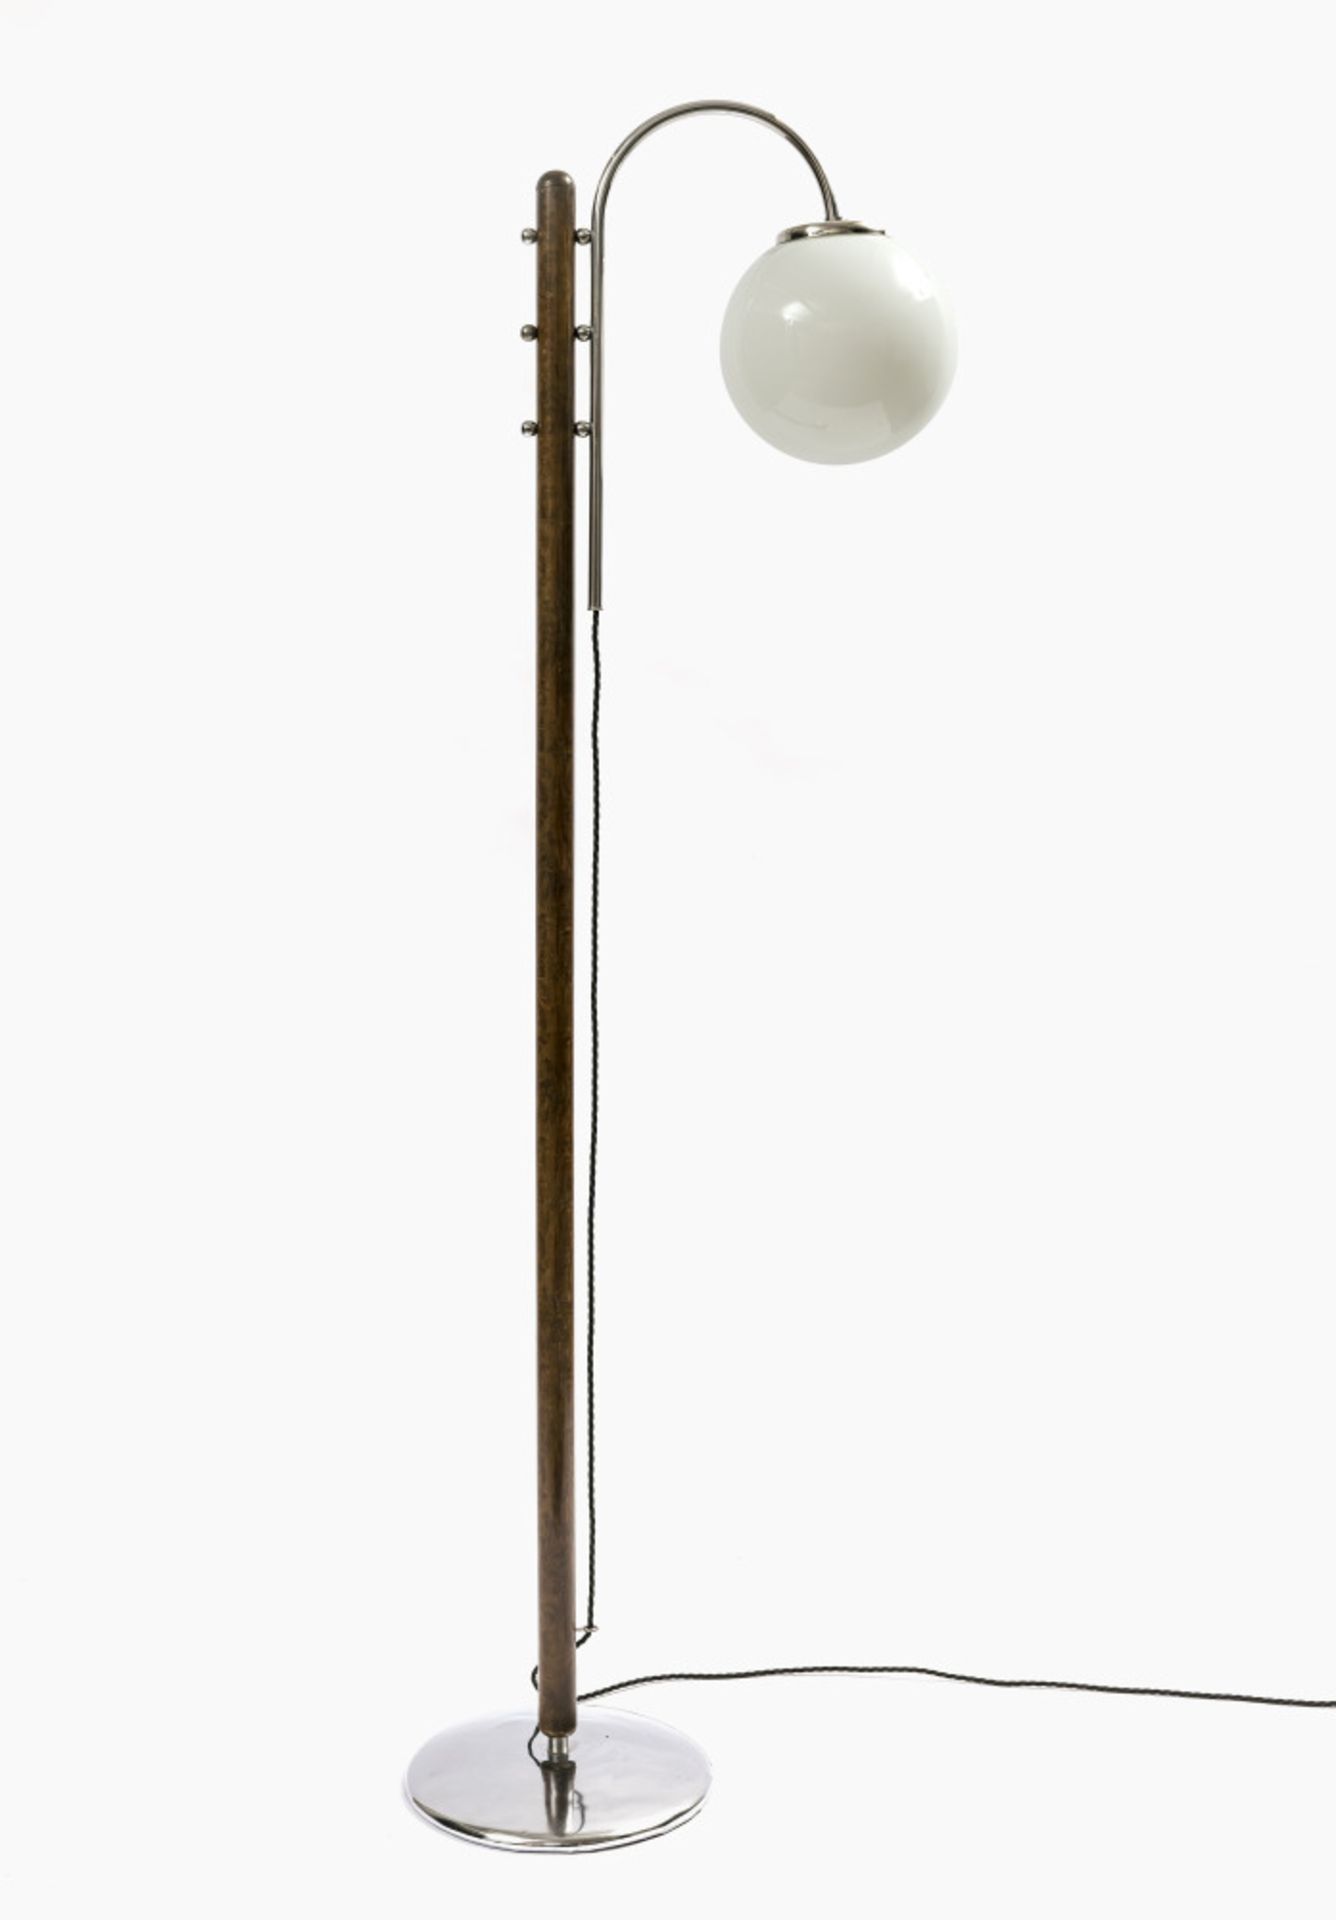 A standard lamp - Jindrich Halabala, Prague and Brno, 1930/32